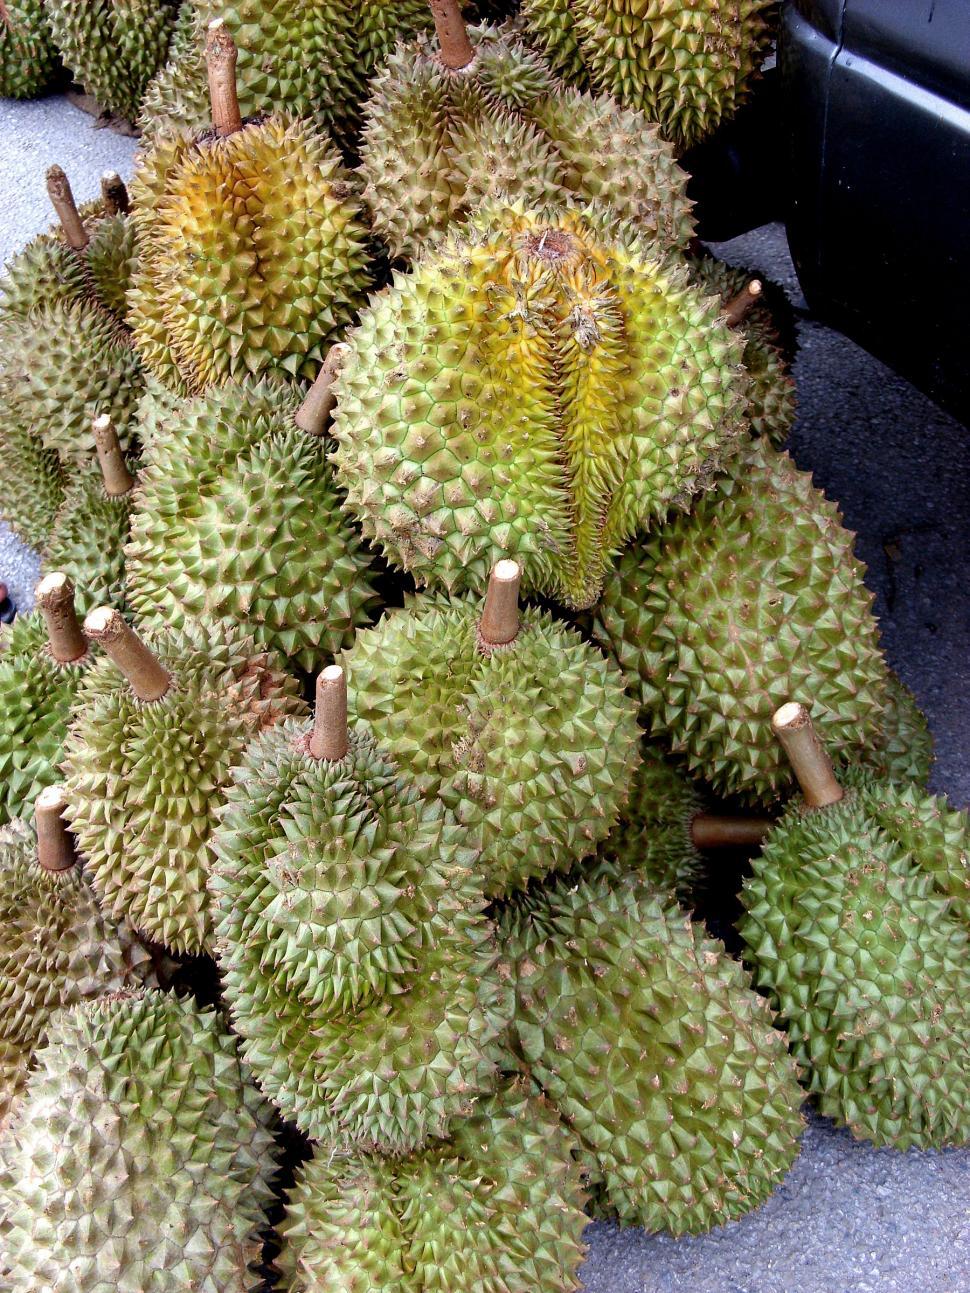 Free Image of Durian fruit 